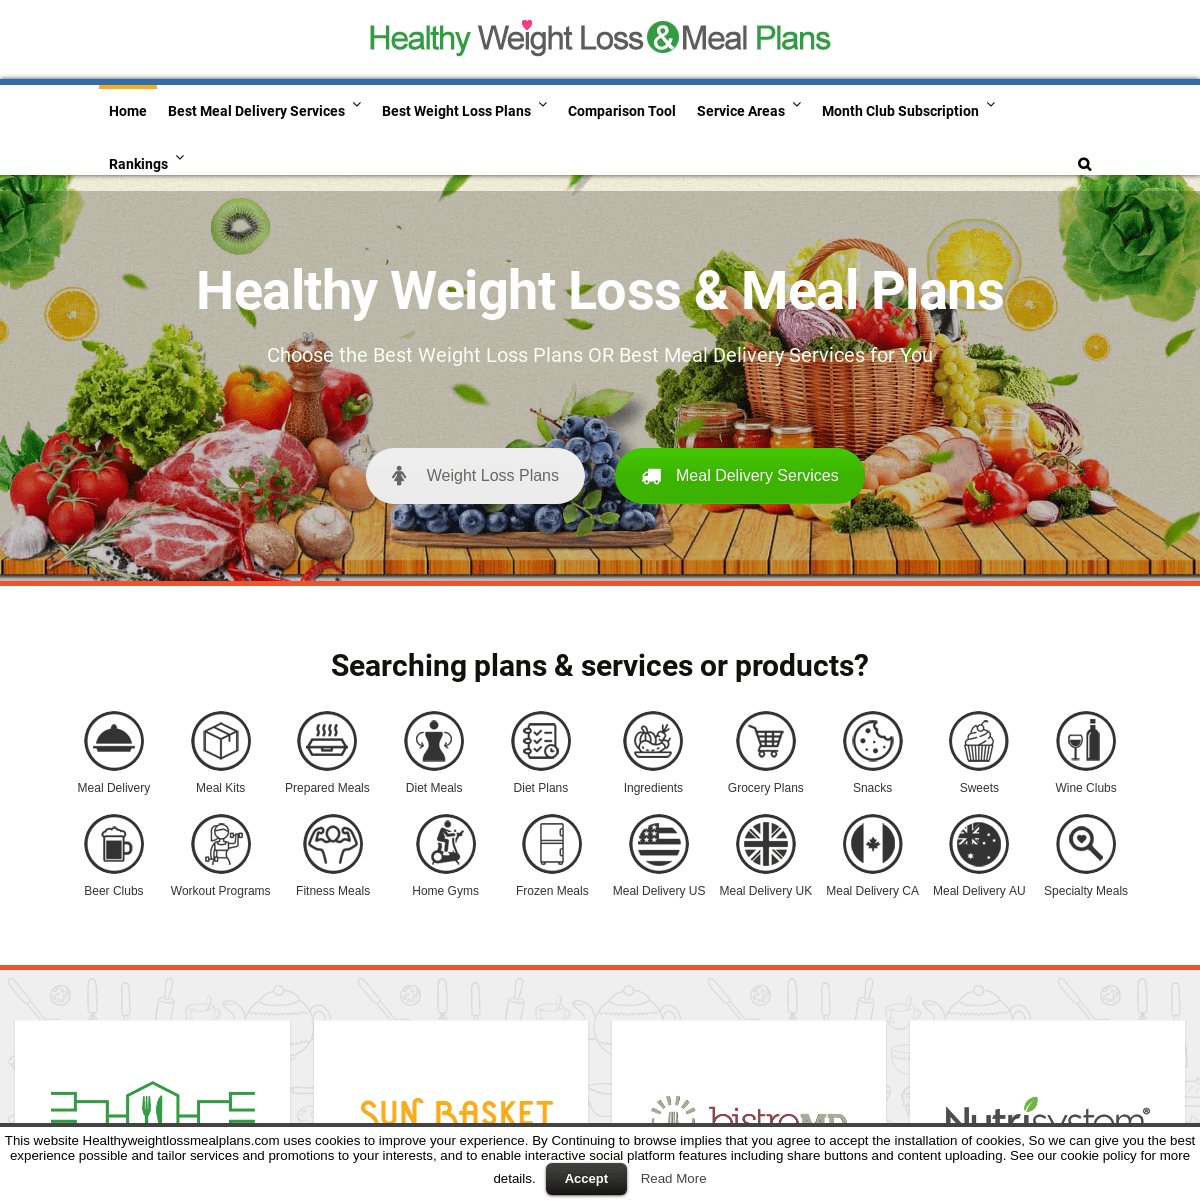 A complete backup of healthyweightlossmealplans.com